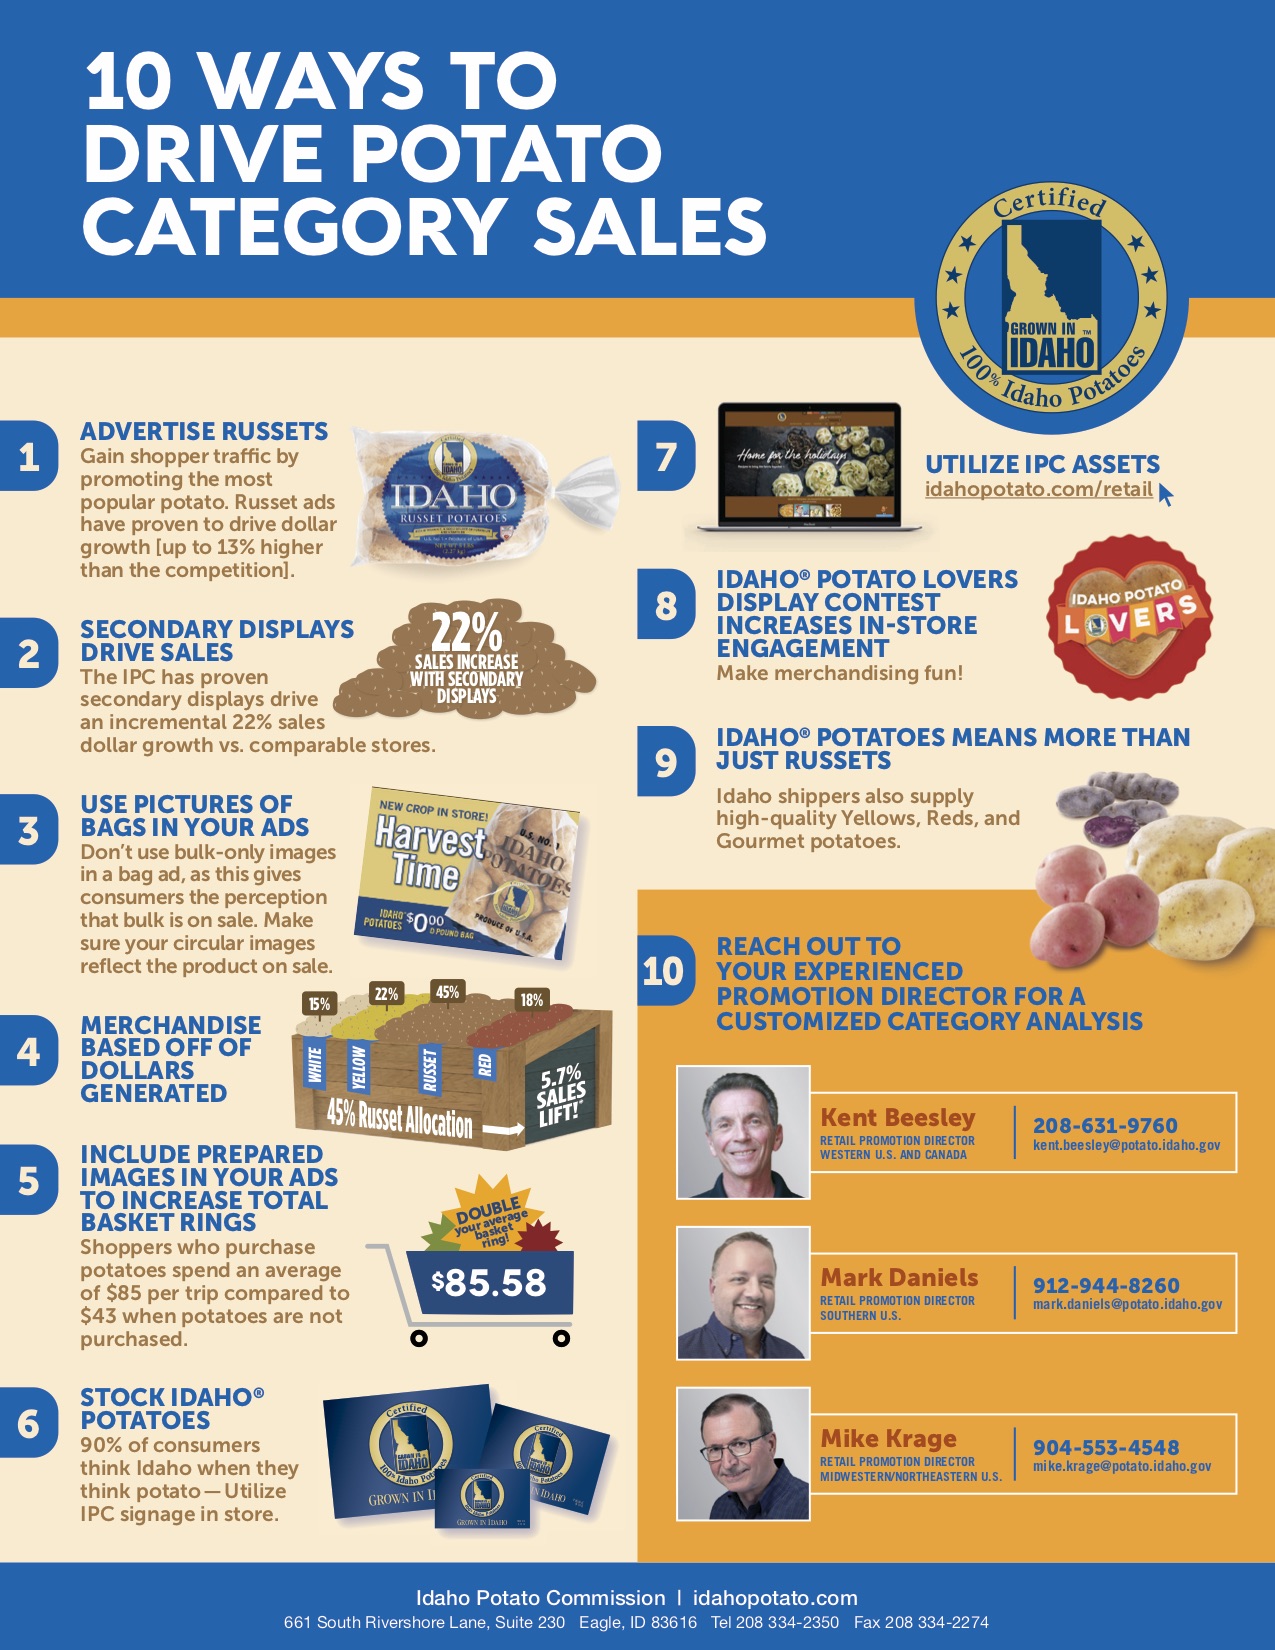 10 Ways to Drive Potato Category Sales